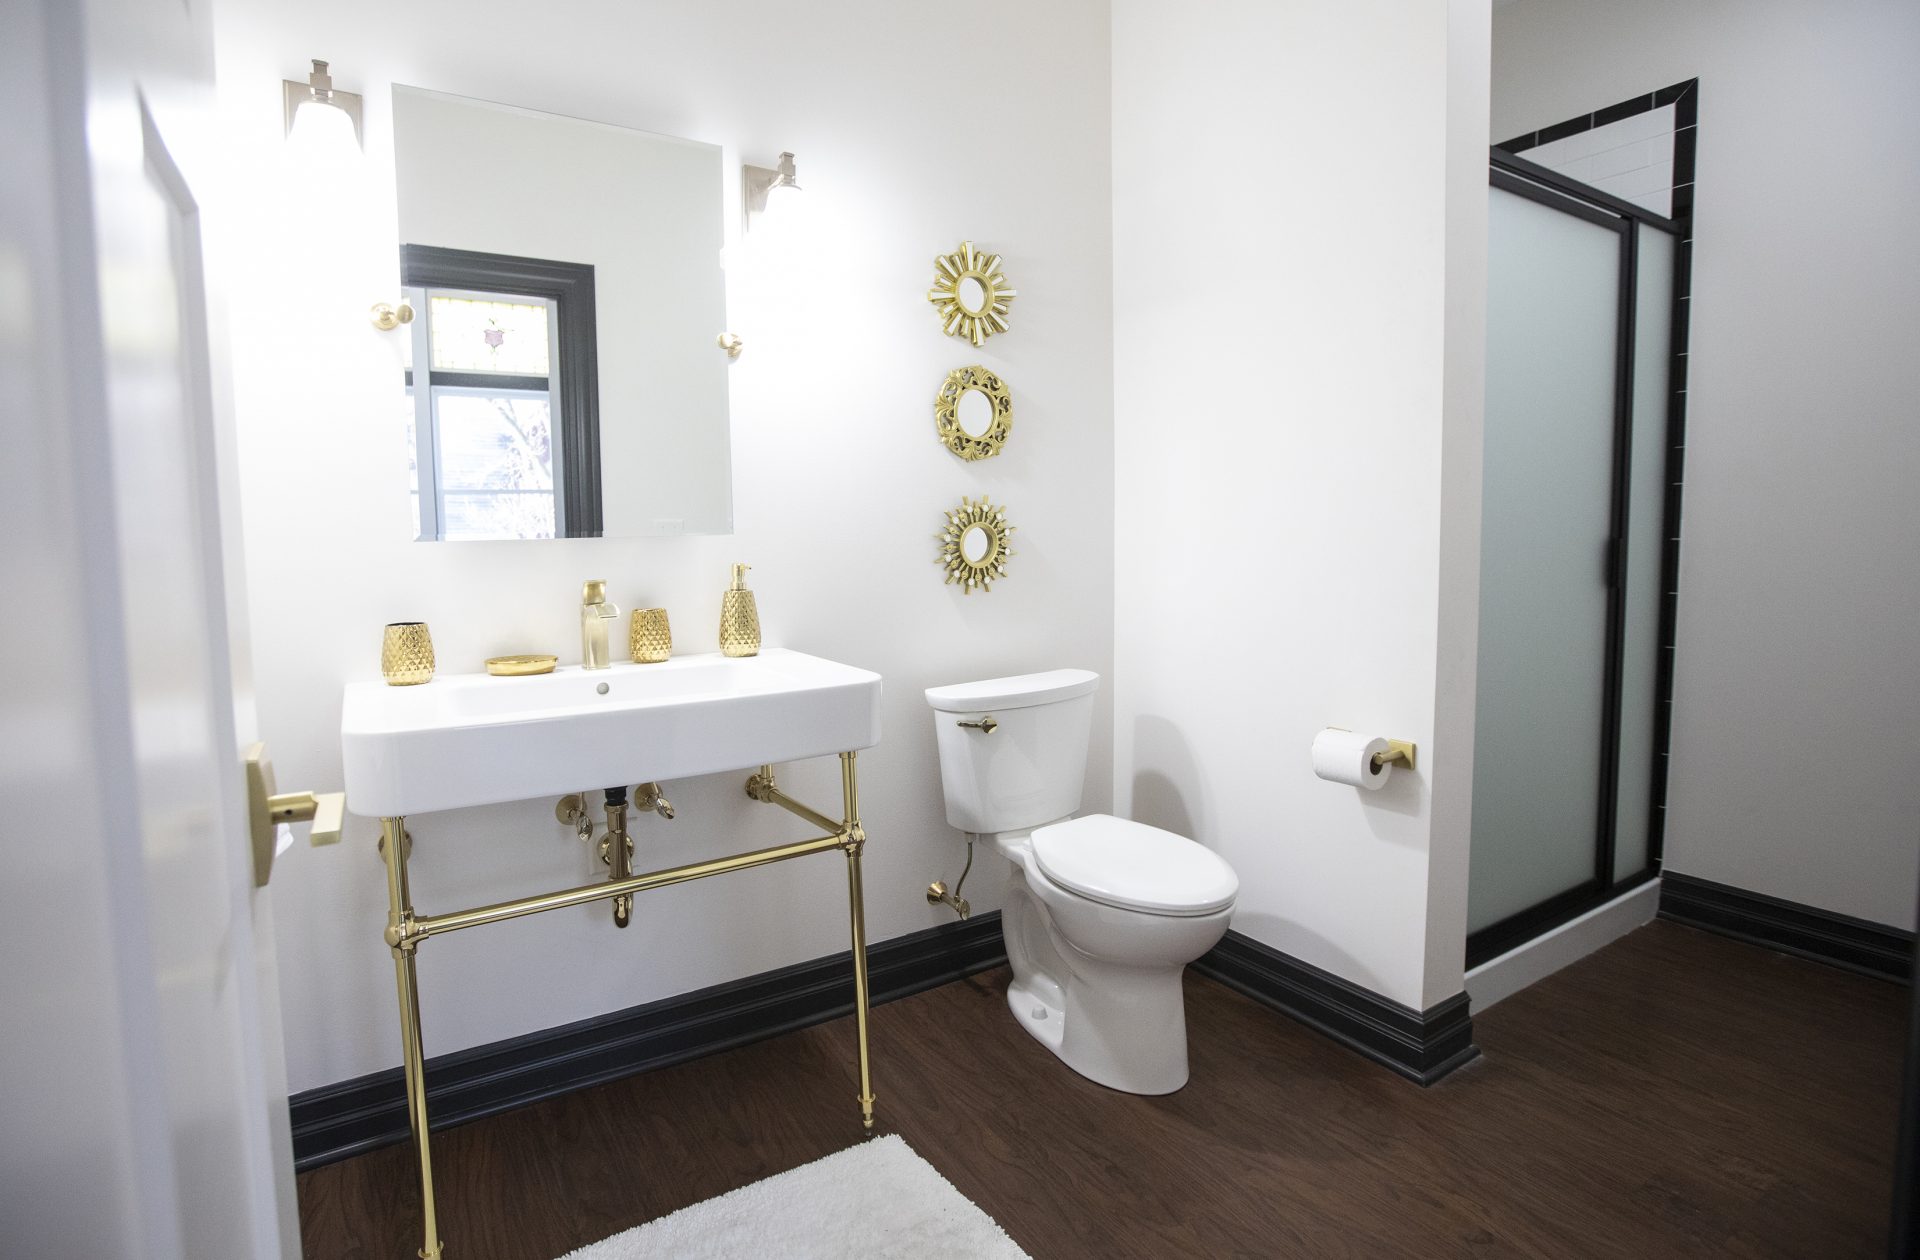 Master bathroom in The Fox on Washington Apartments in Harrisburg. Dec. 20, 2019.